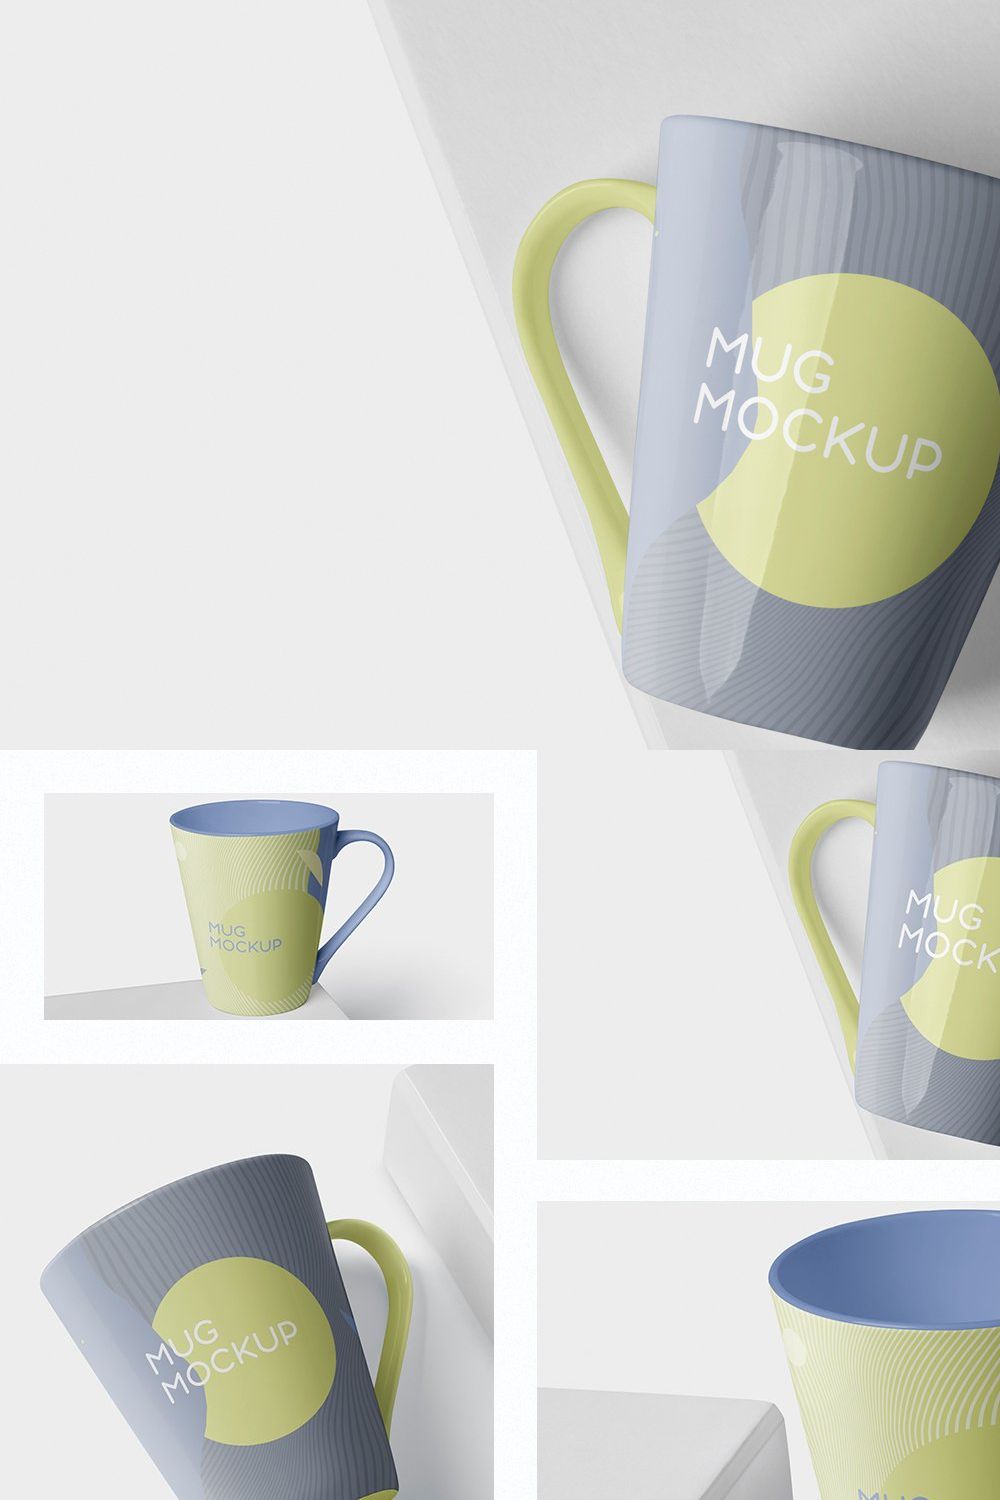 Mug Mockup - Cone pinterest preview image.